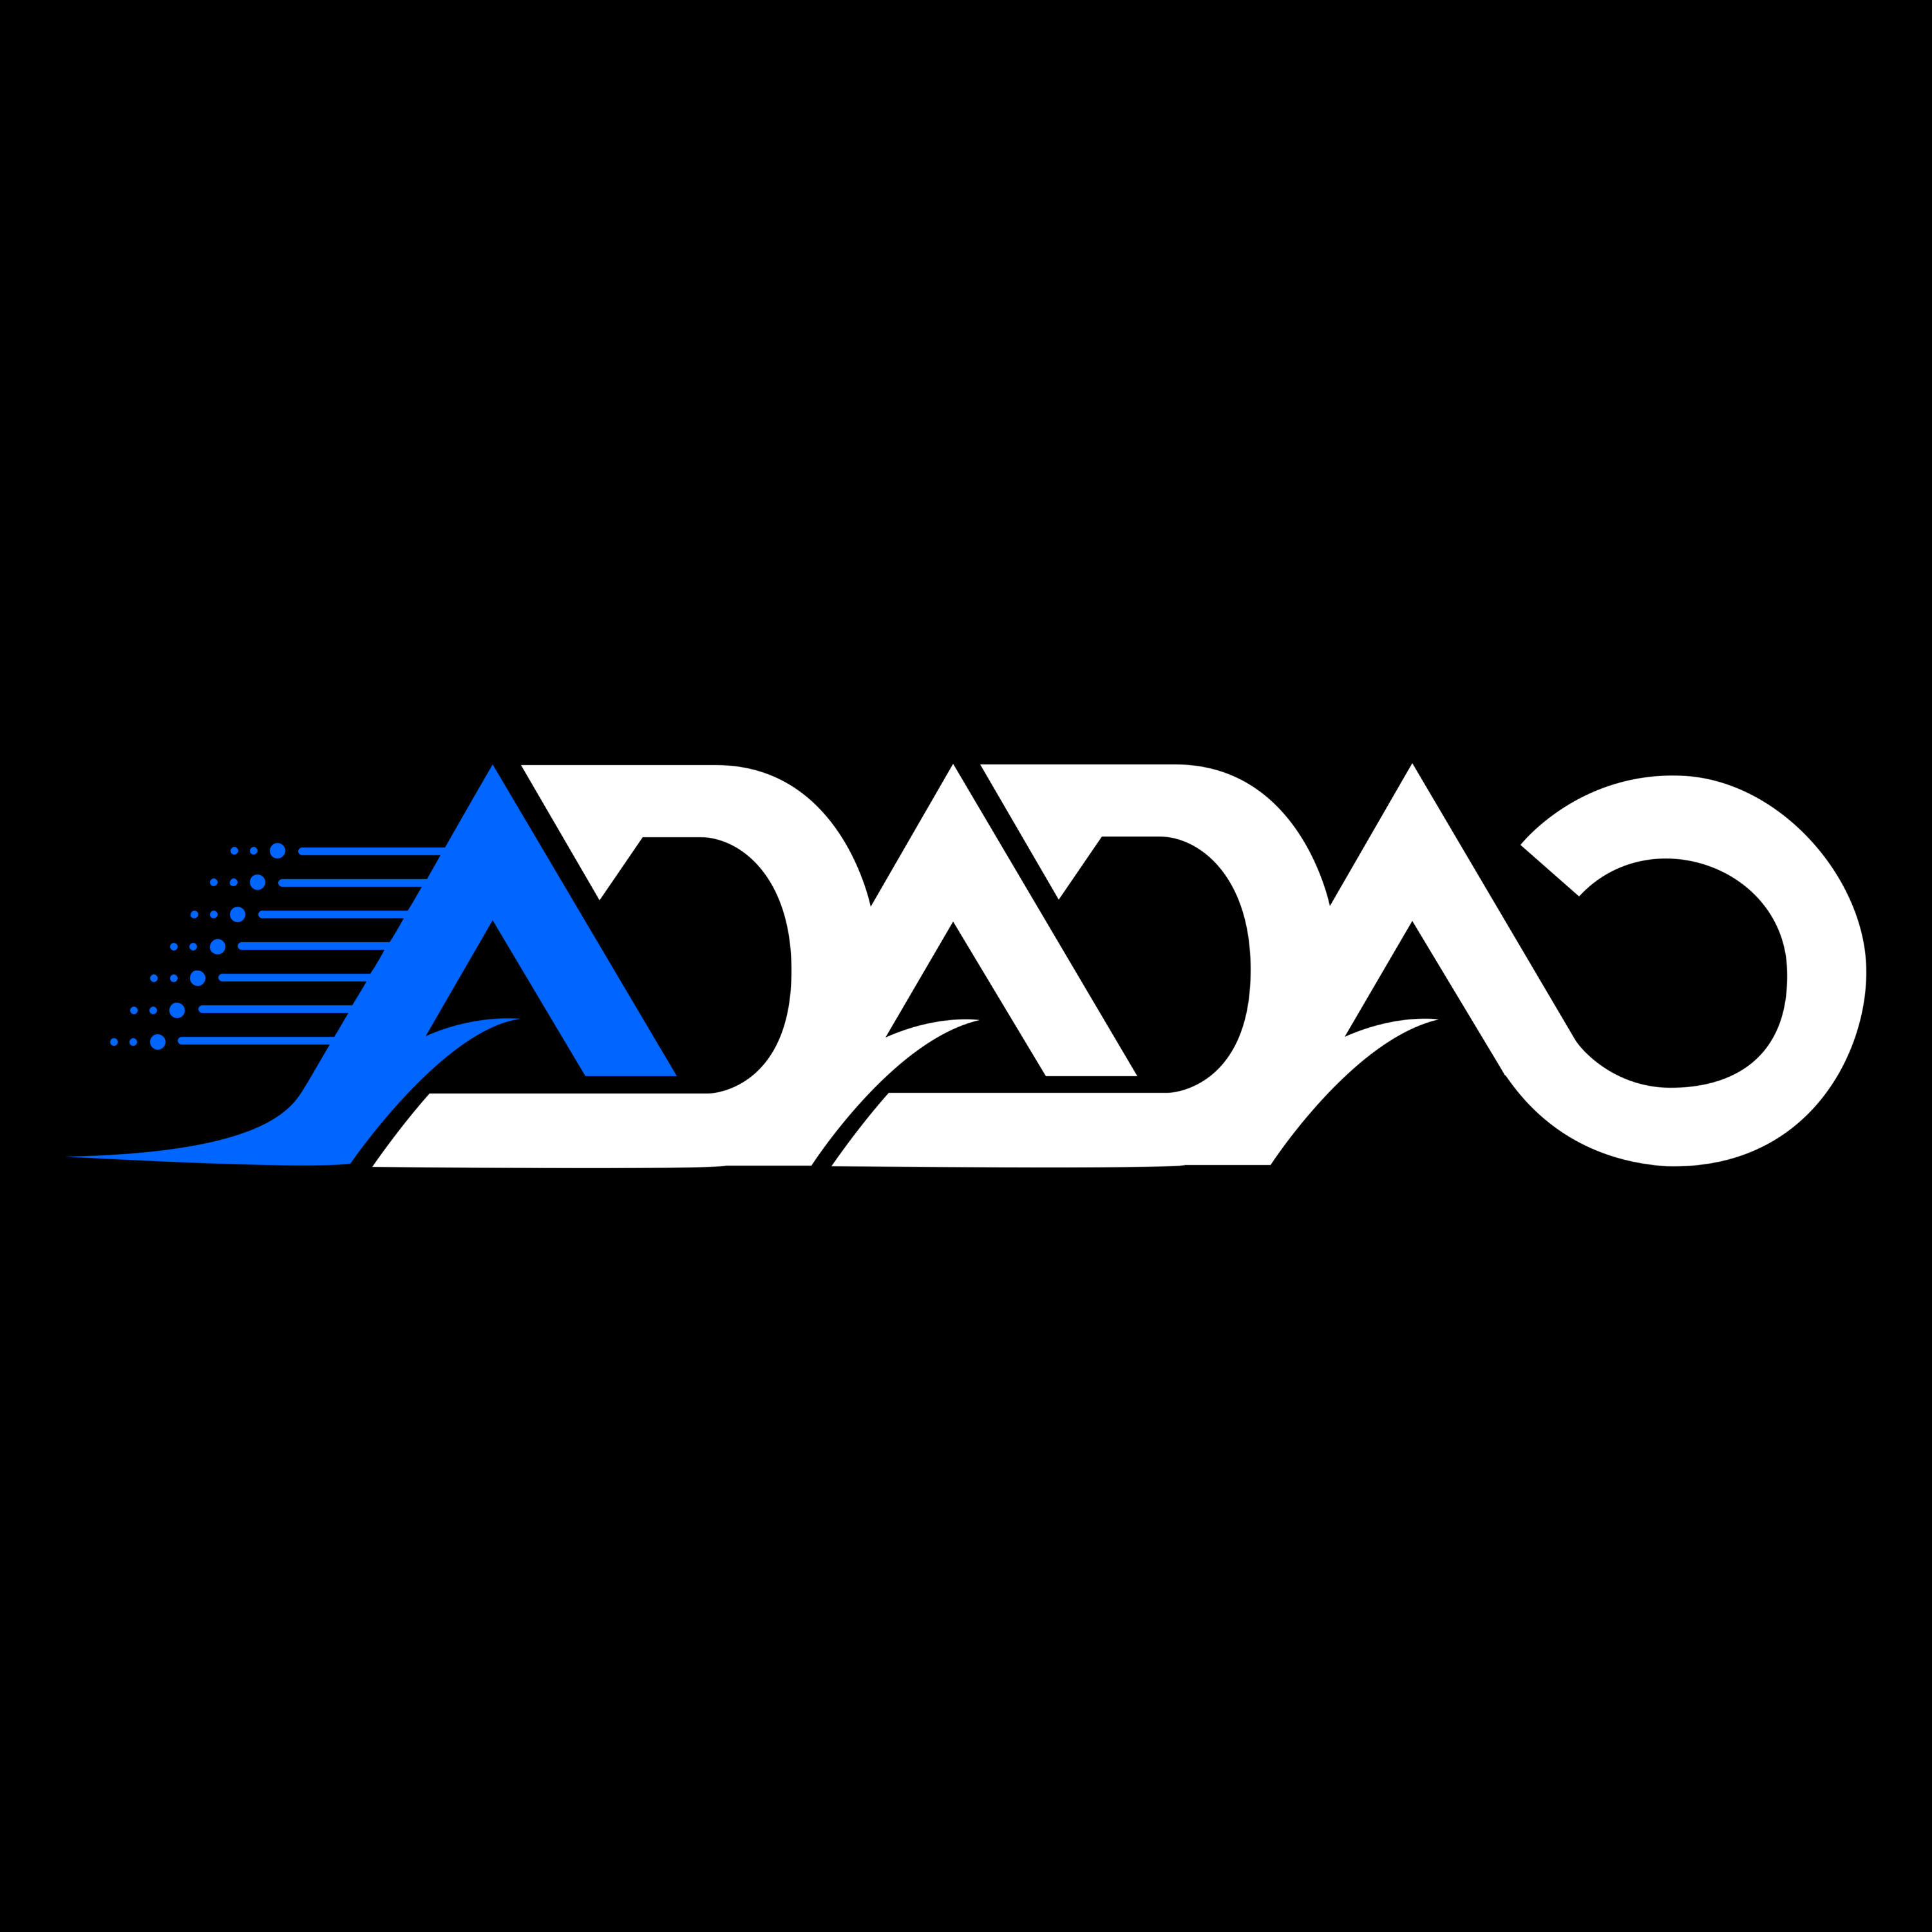 Adadao Logo